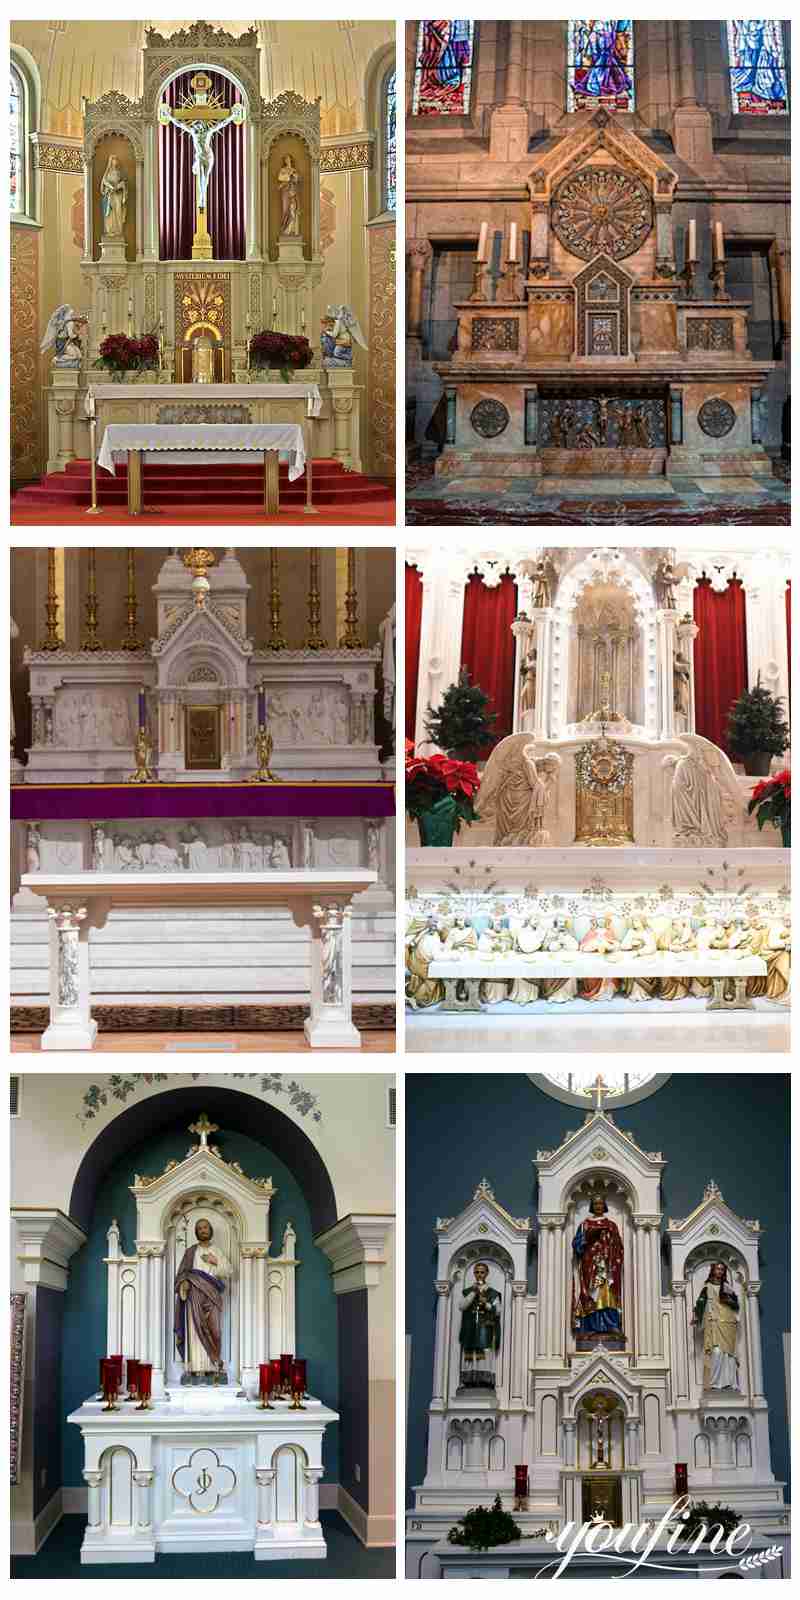 How Many Kinds of Altars?